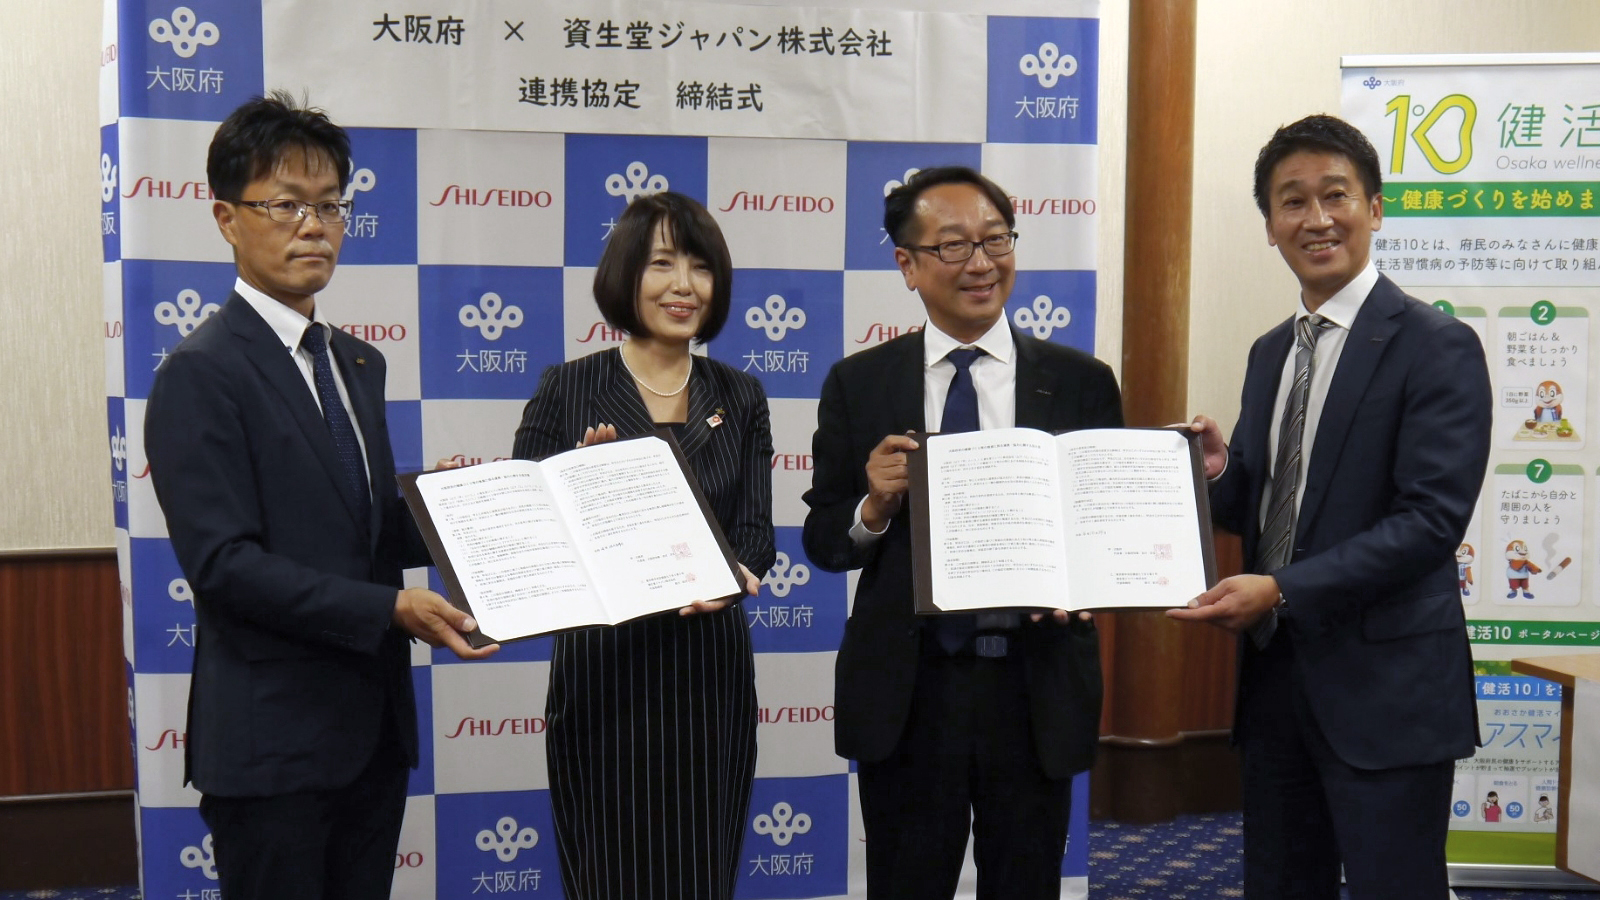 Delegates from Osaka and Shiseido Japan at the signing ceremony